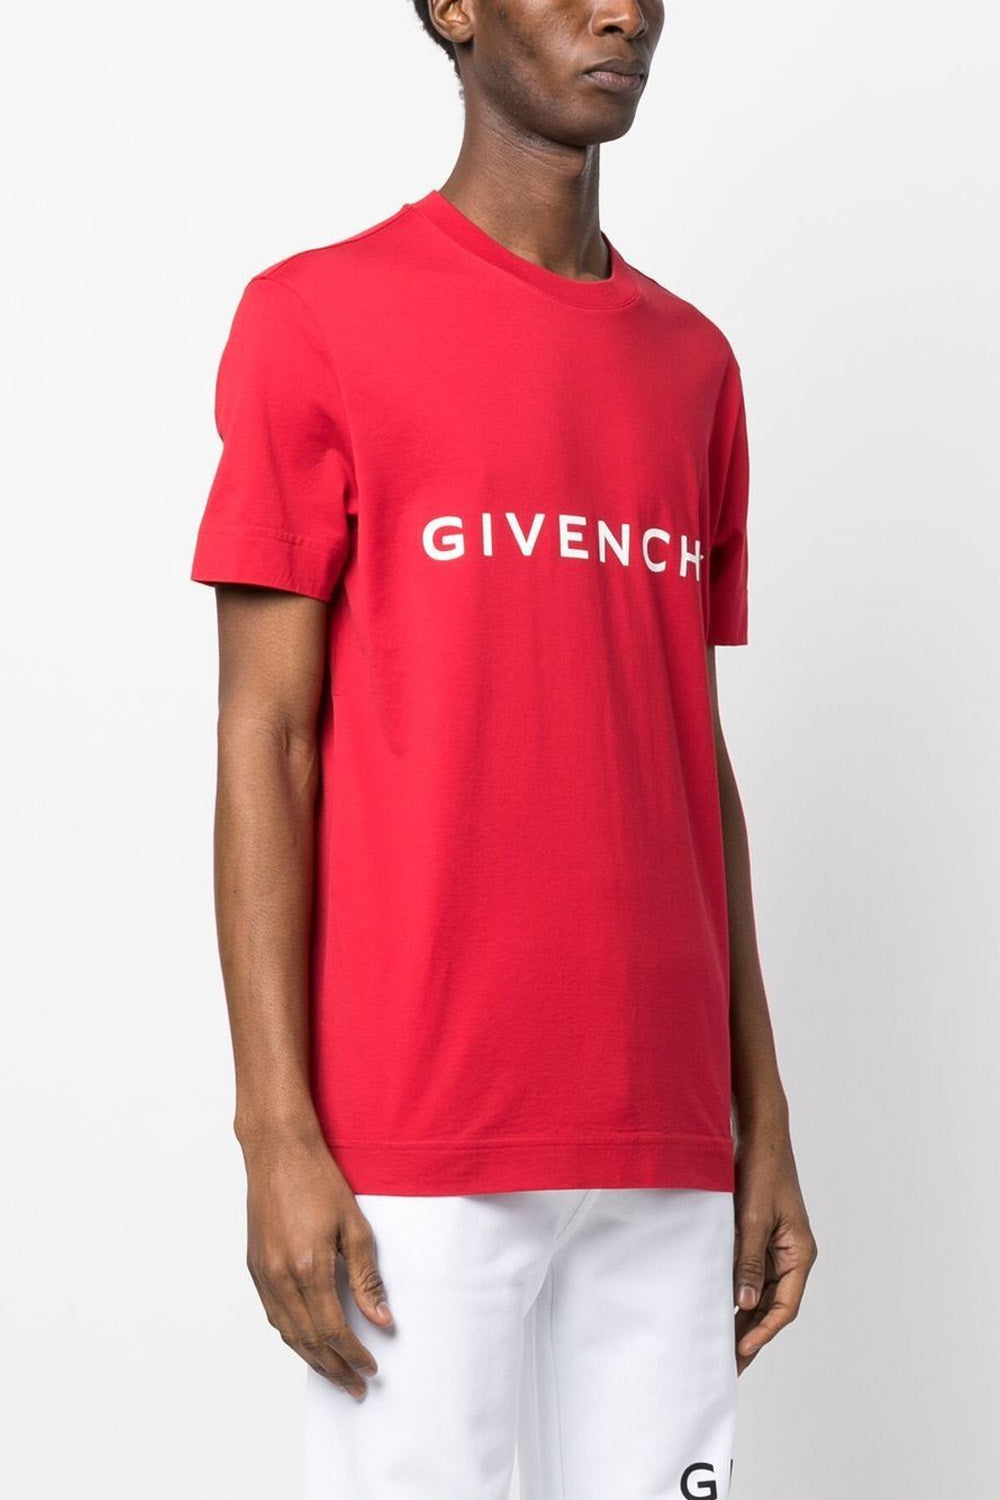 Givenchy Logo print T-Shirt red